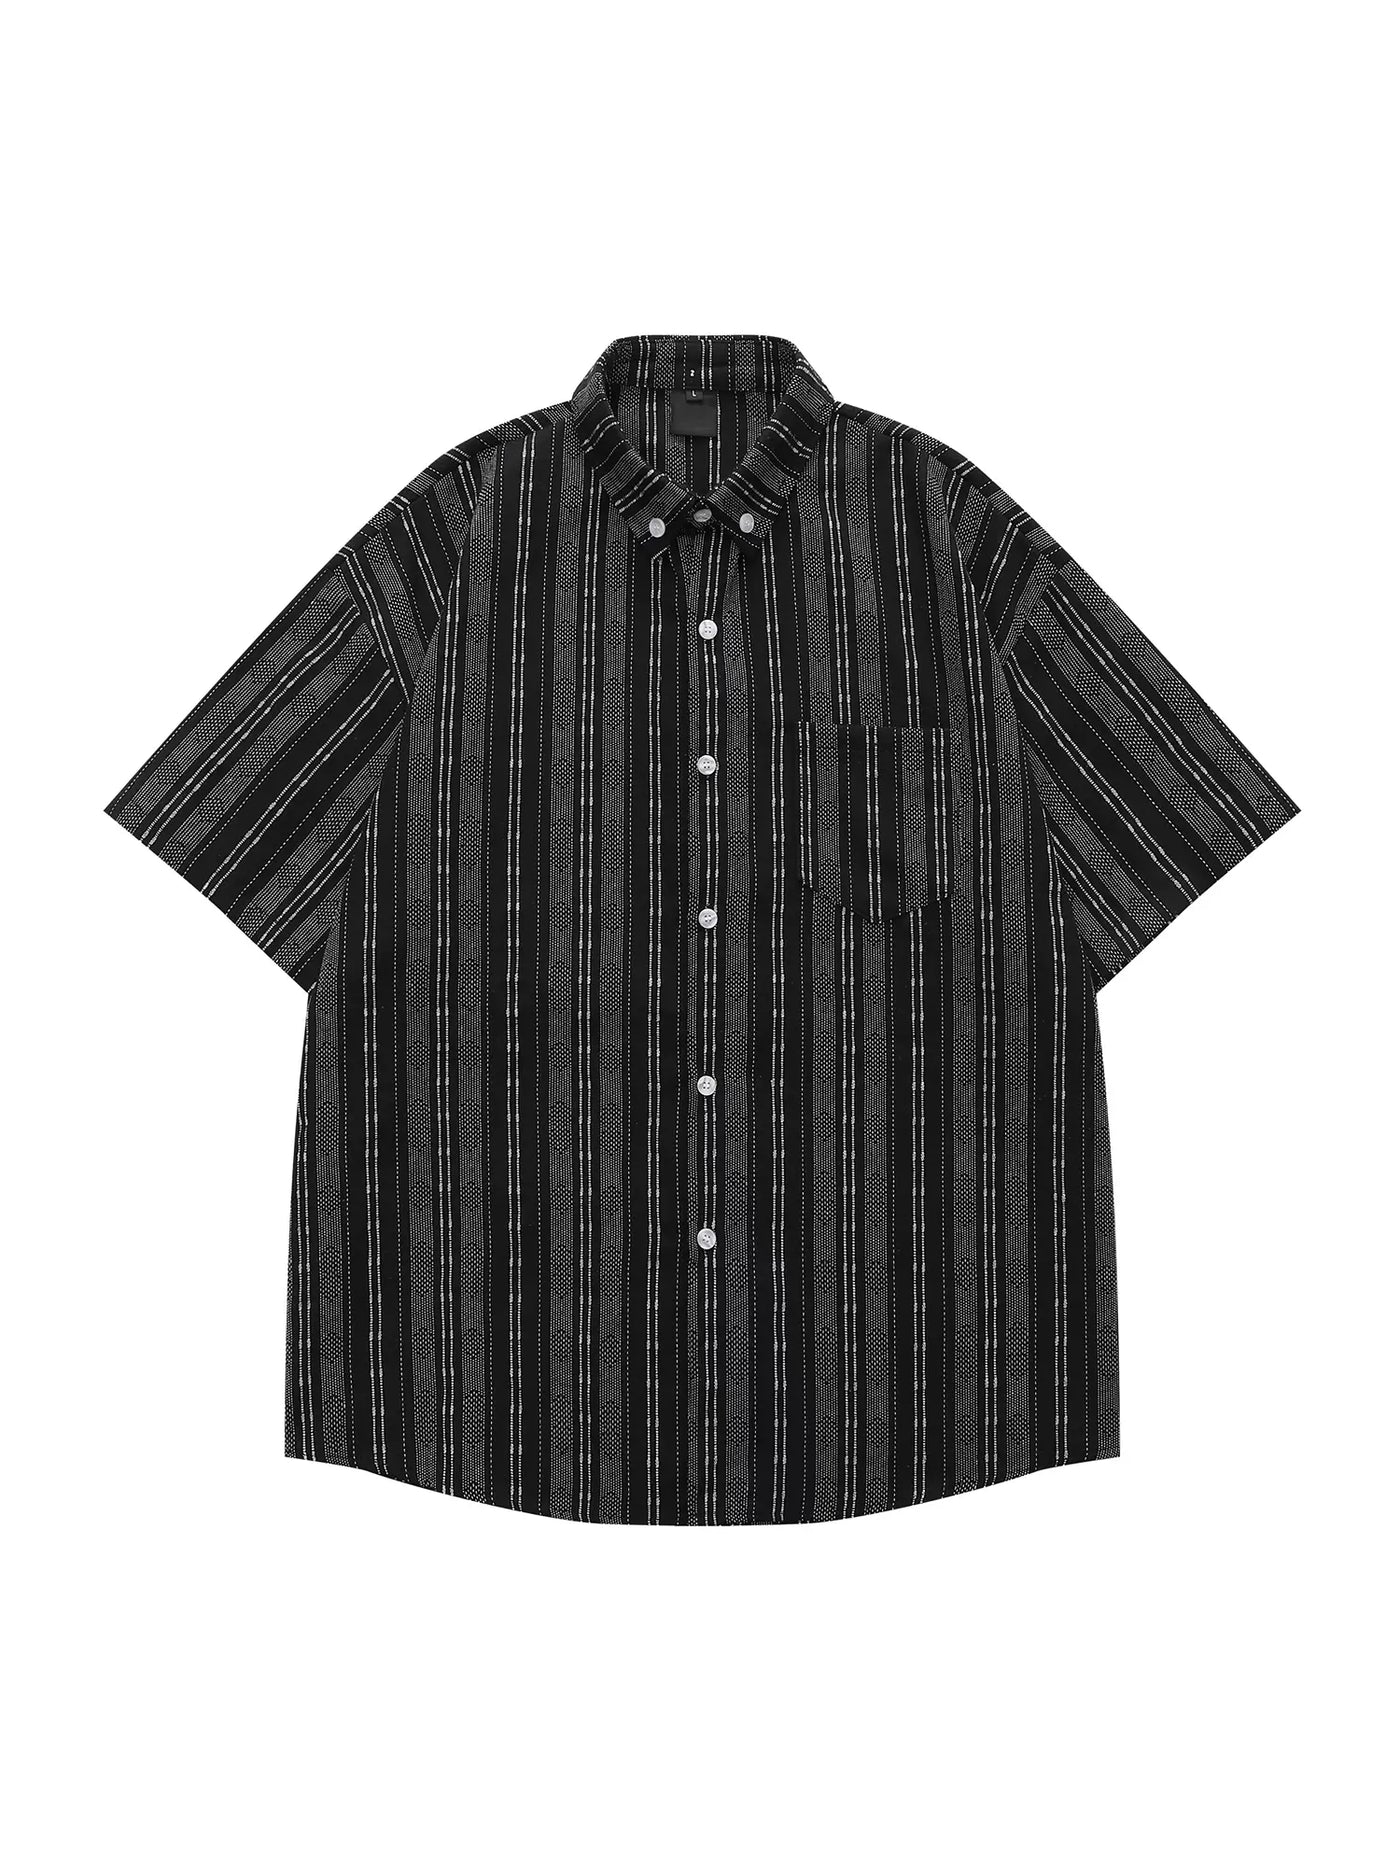 Broken Lines Striped Shirt Korean Street Fashion Shirt By MaxDstr Shop Online at OH Vault